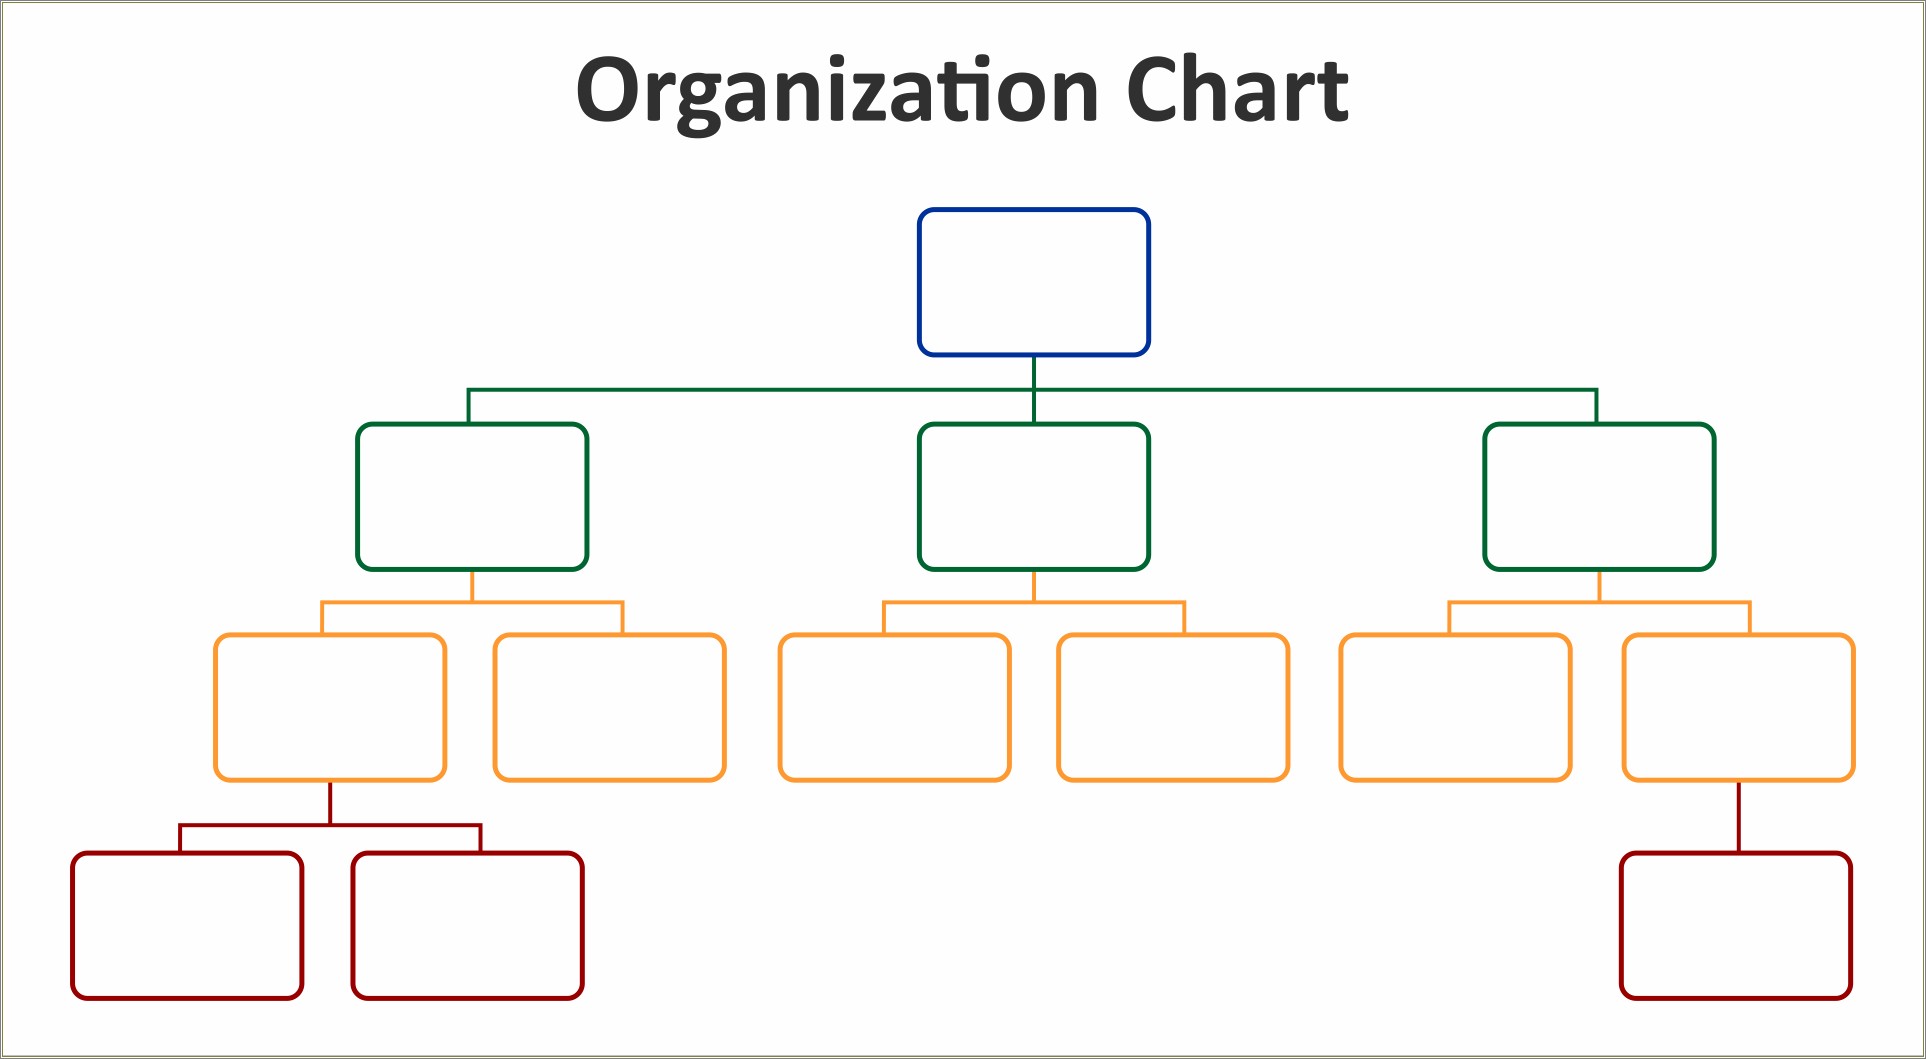 Download A Free Organizational Chart Template